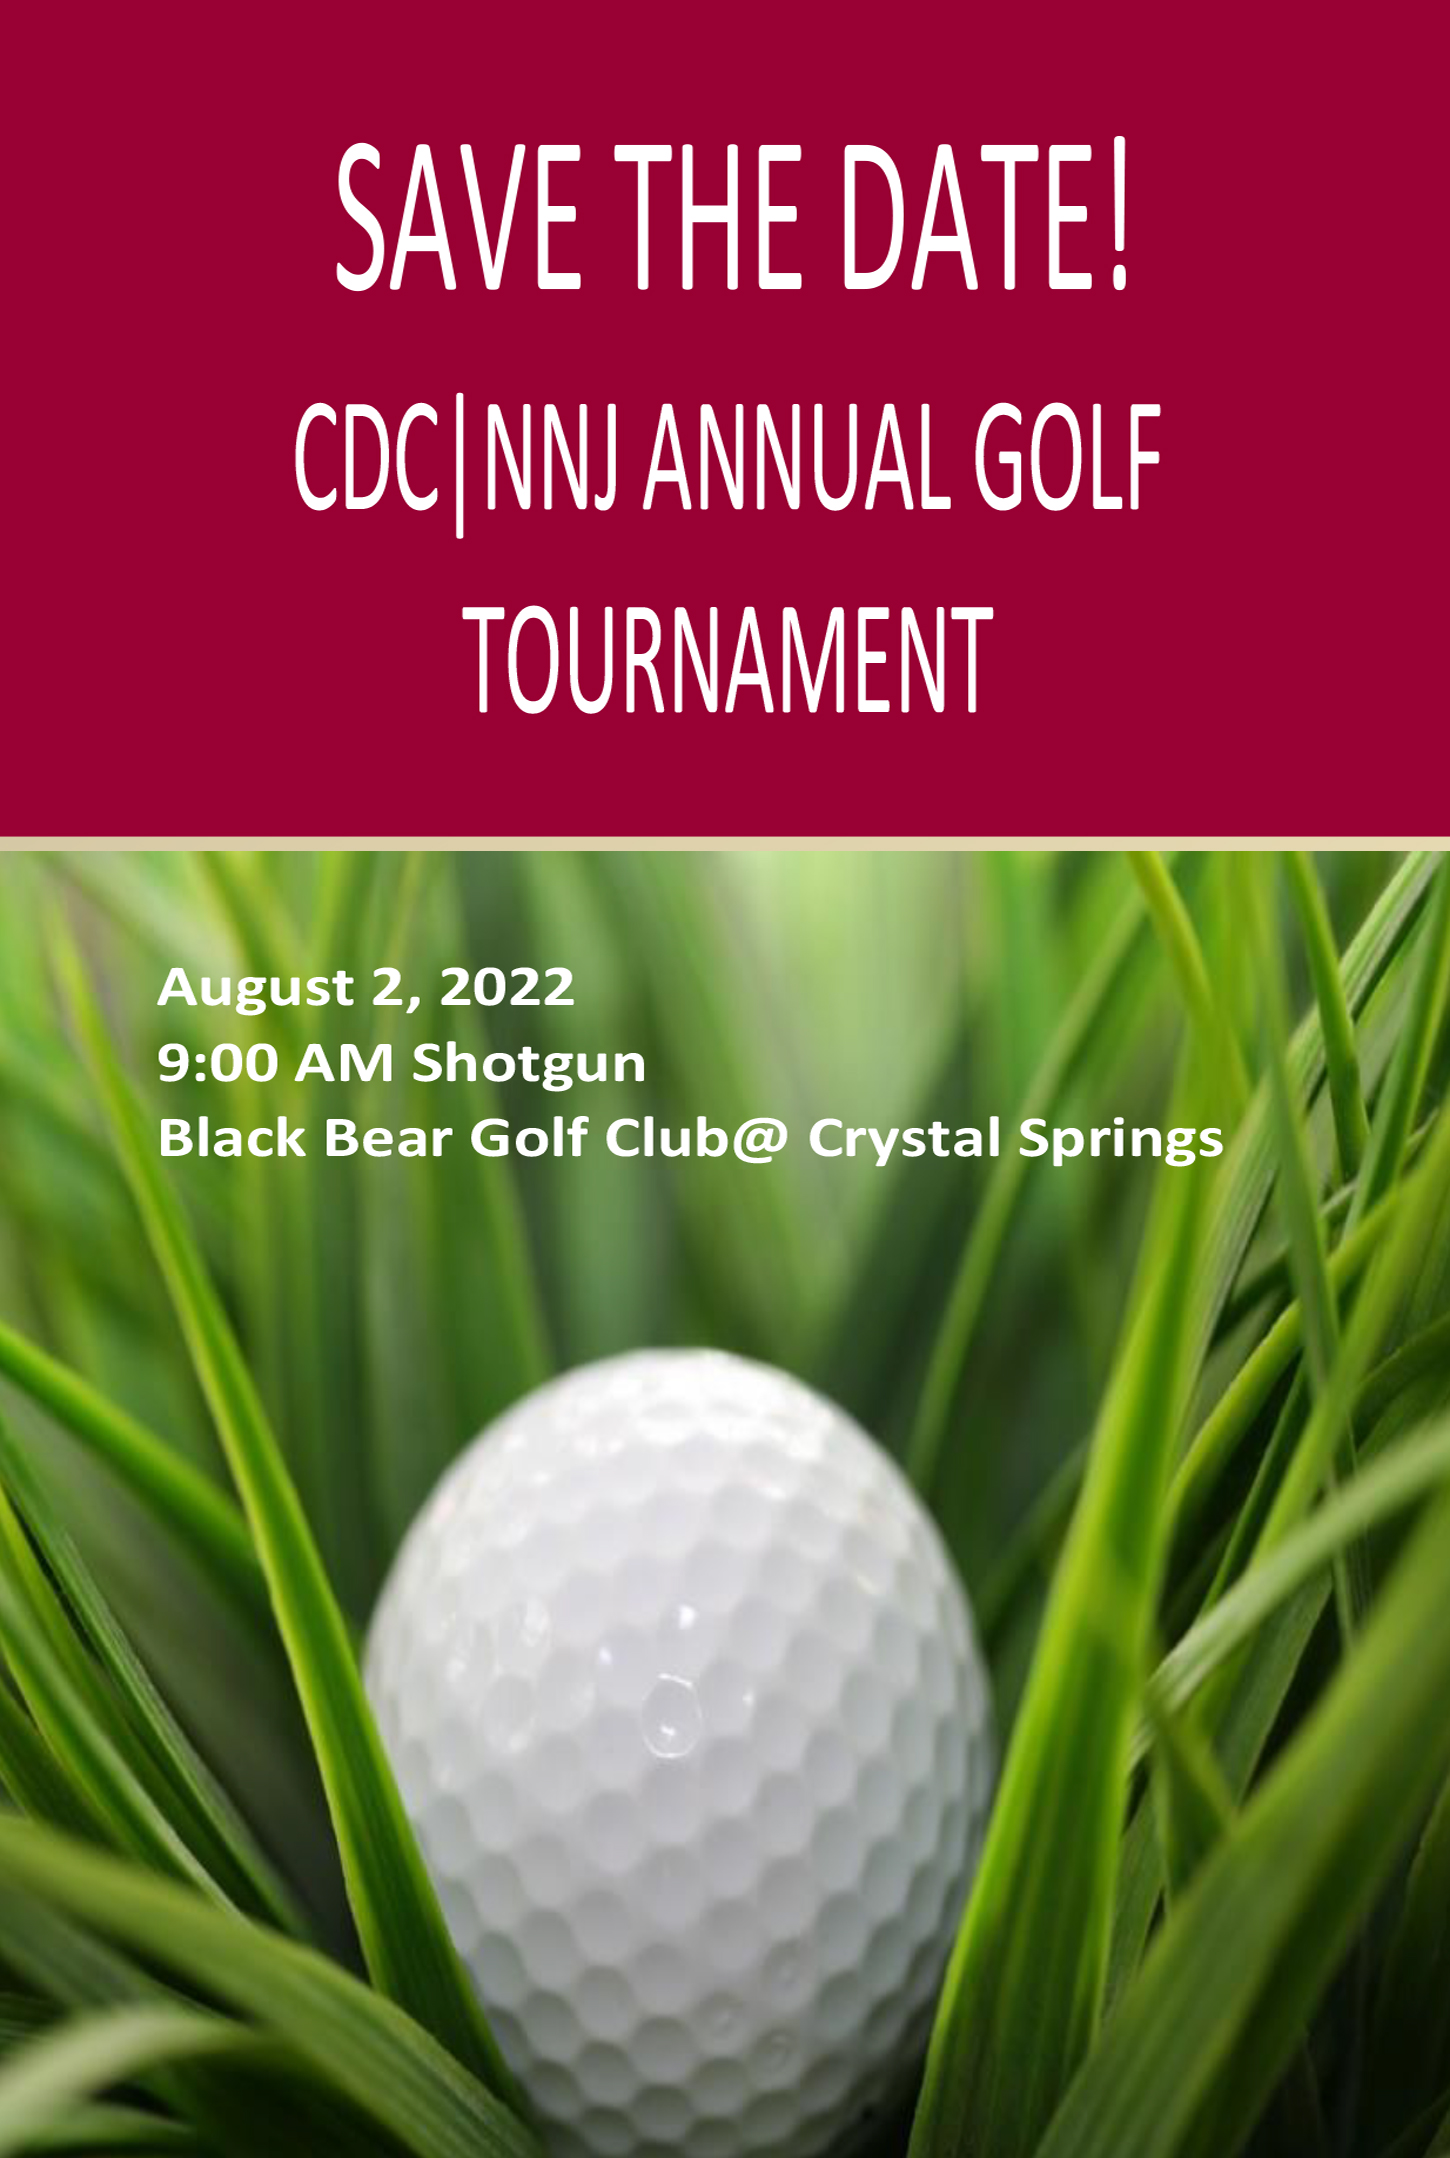 CDC NNJ Annual Golf Tournament